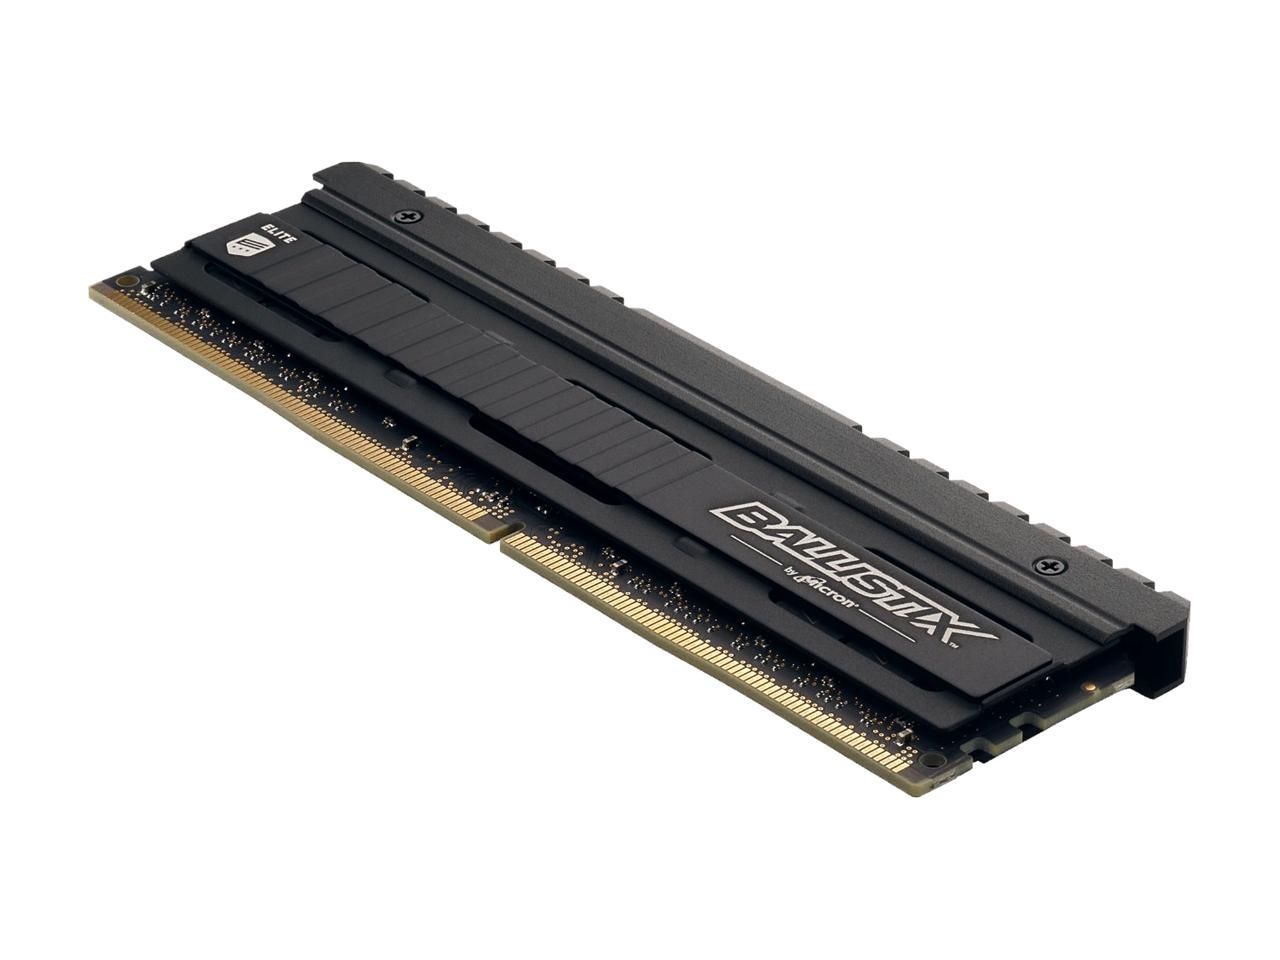 Crucial Ballistix Elite 4000 MHz DDR4 DRAM Desktop Gaming Memory Kit 32GB (8GBx4) CL18 BLE4K8G4D40BEEAK